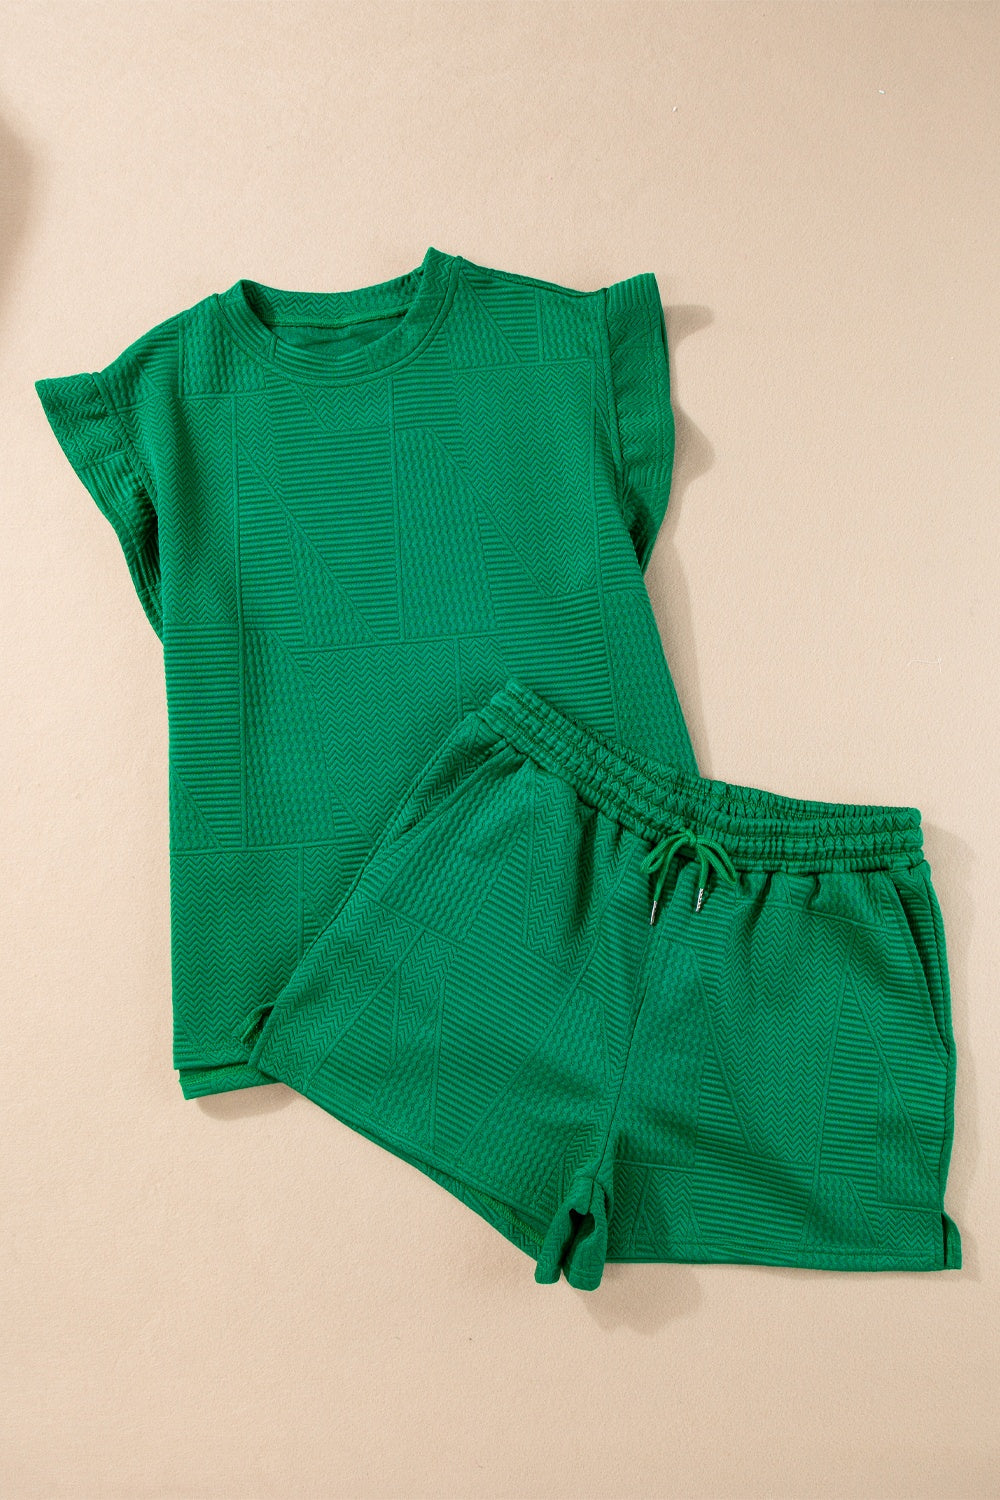 Jewel Tone Top and Drawstring Shorts Set *2 colors*